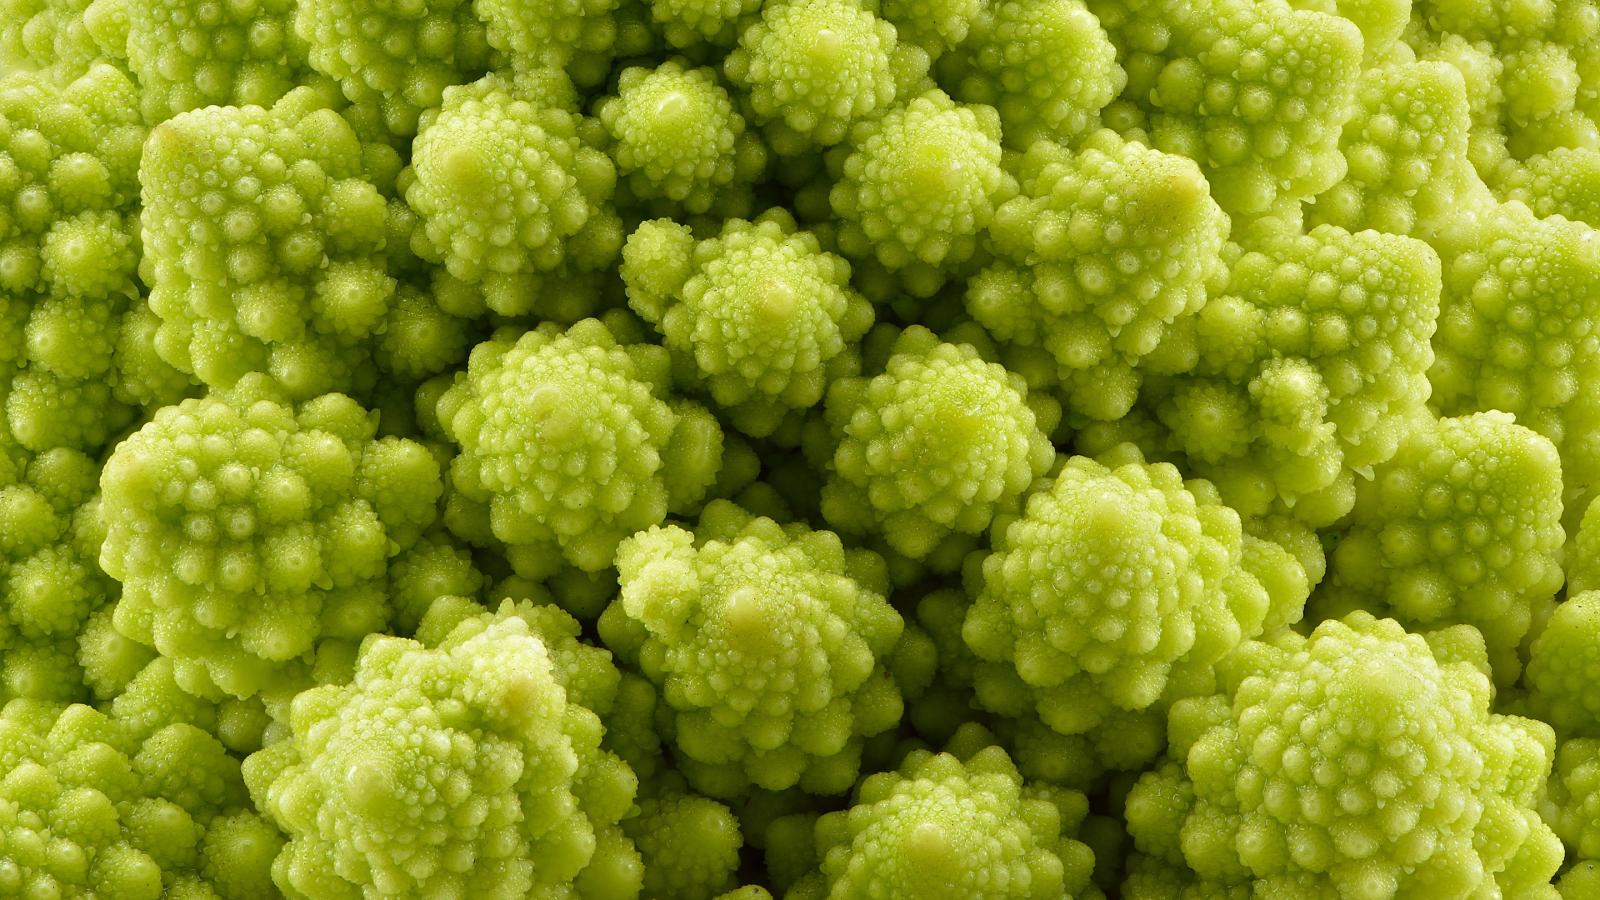 Close-up photograph of Romanesco broccoli